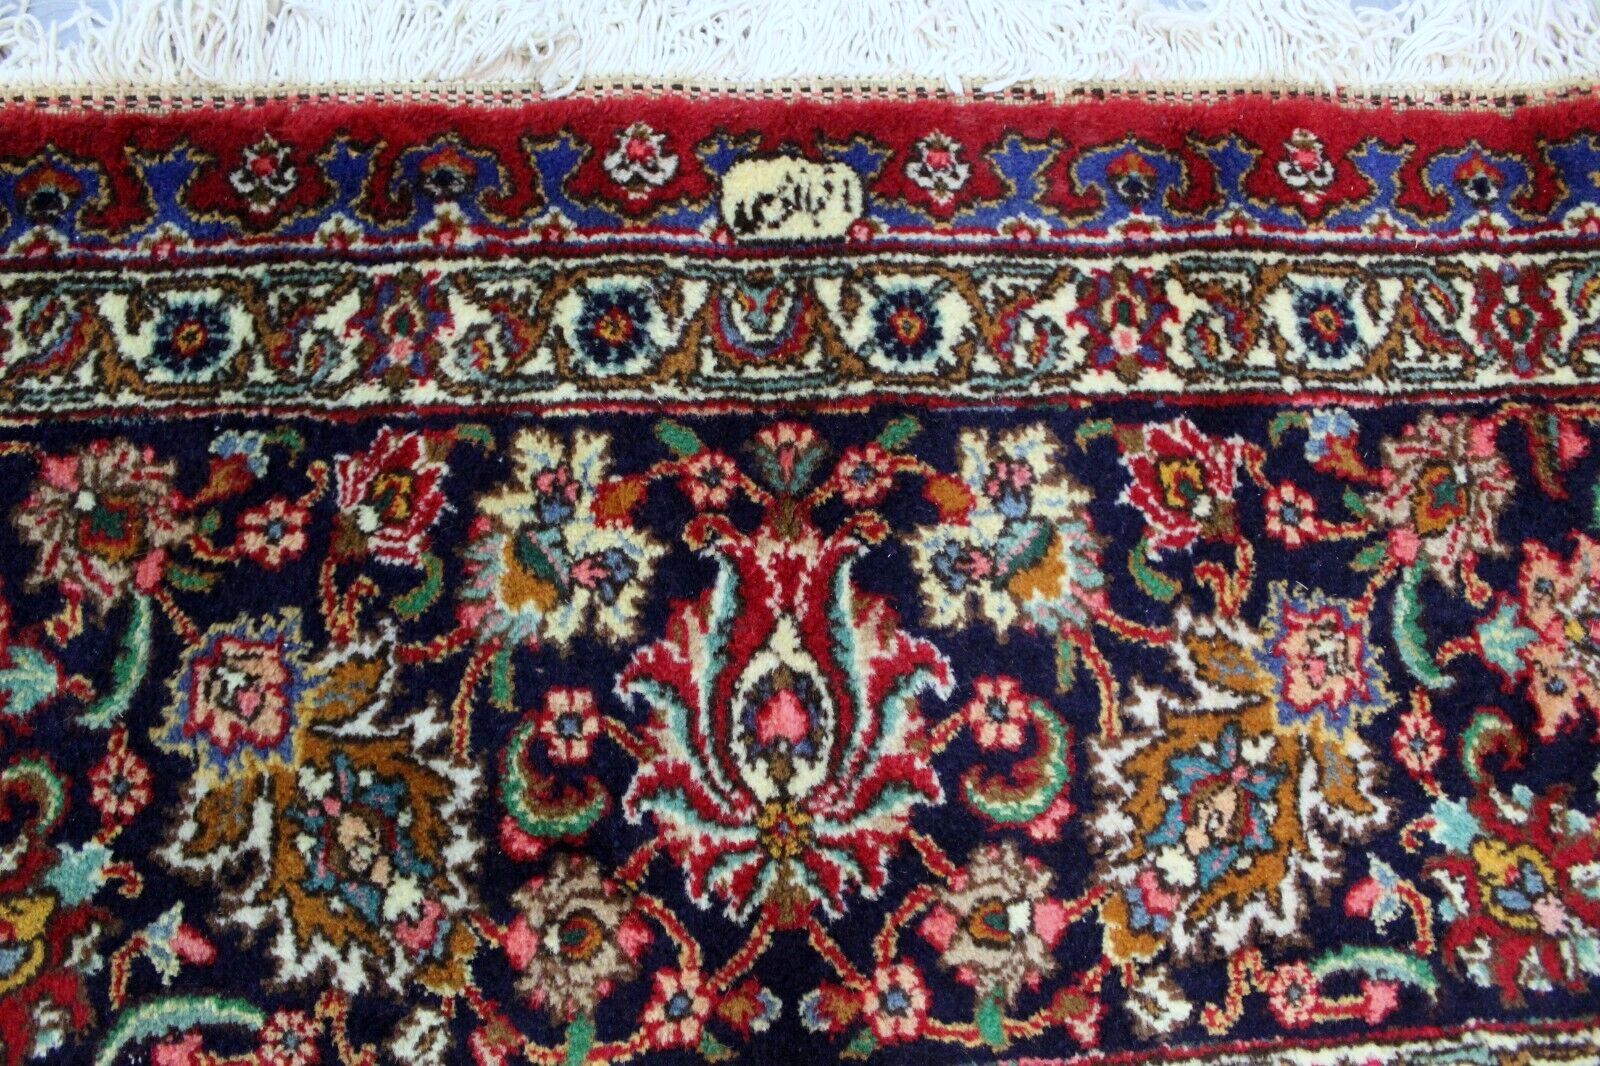 Dimensions of Handmade Vintage Persian Tabriz Oversize Rug: Width - 375cm, Length - 630cm - 1960s